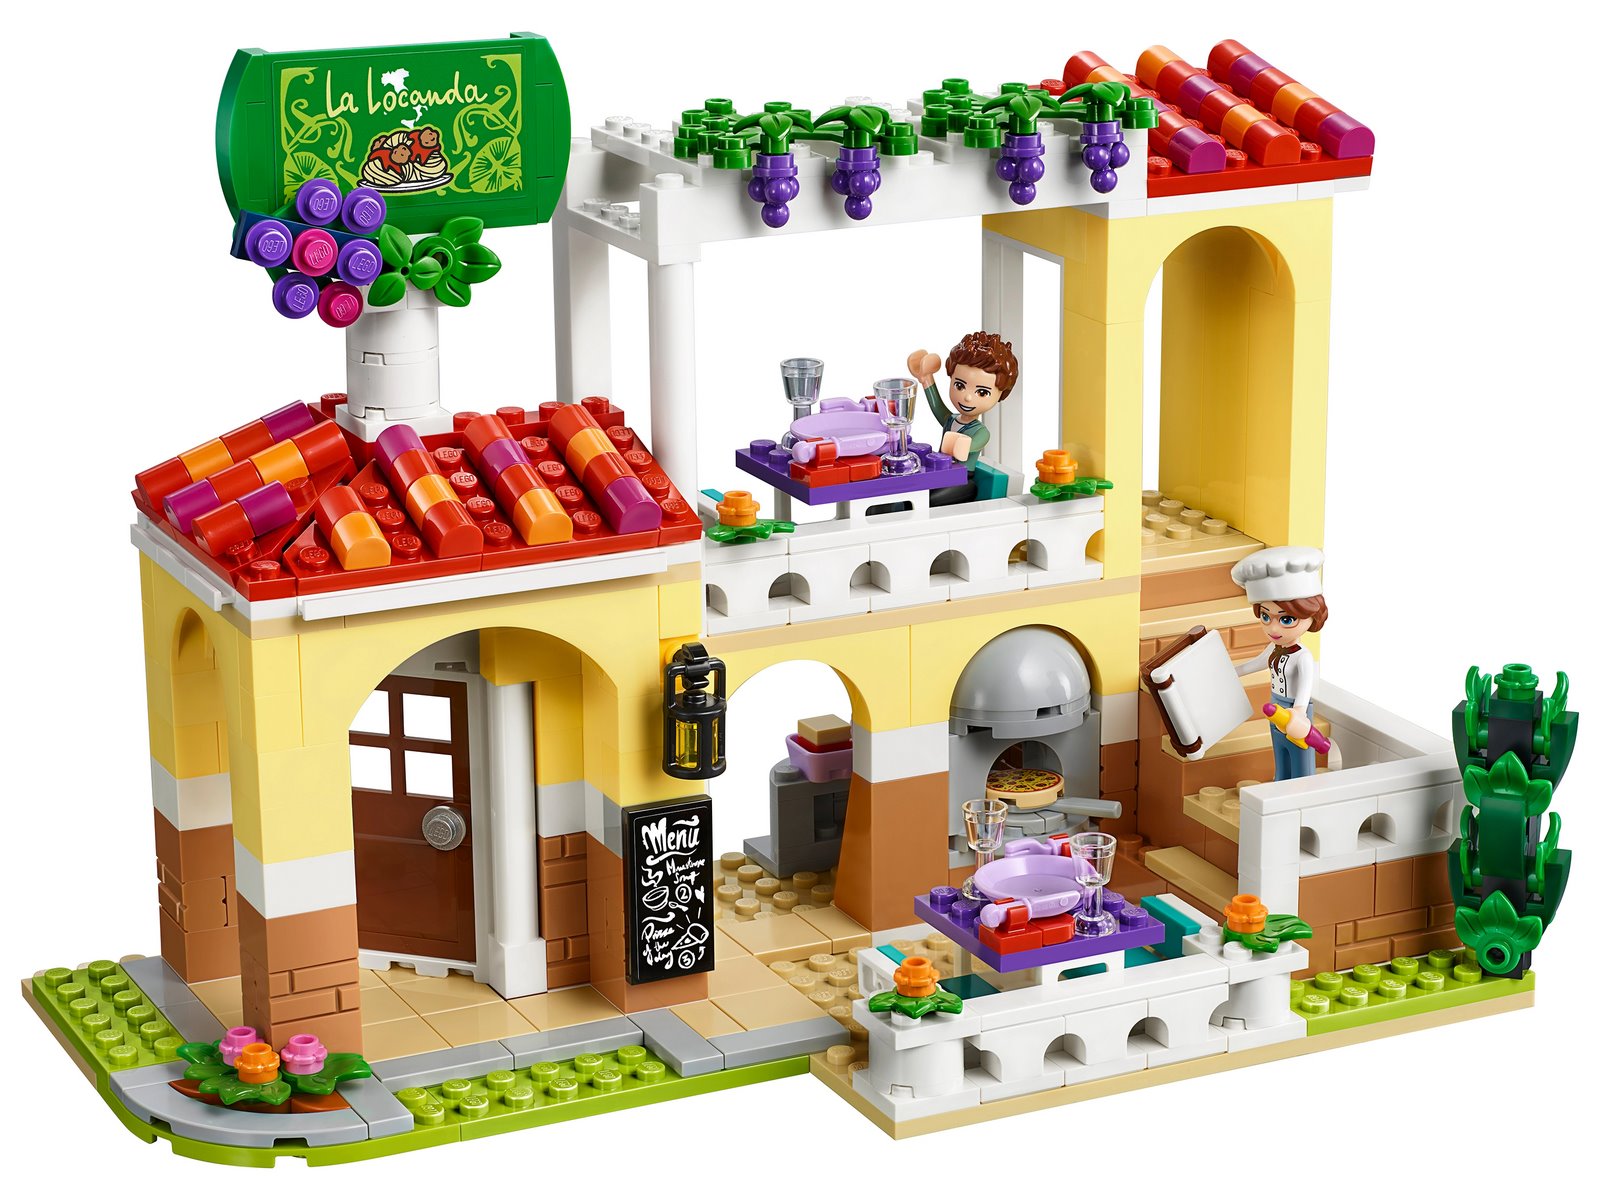 Конструктор LEGO Friends «Ресторан Хартлейк Сити» 41379 / 624 детали